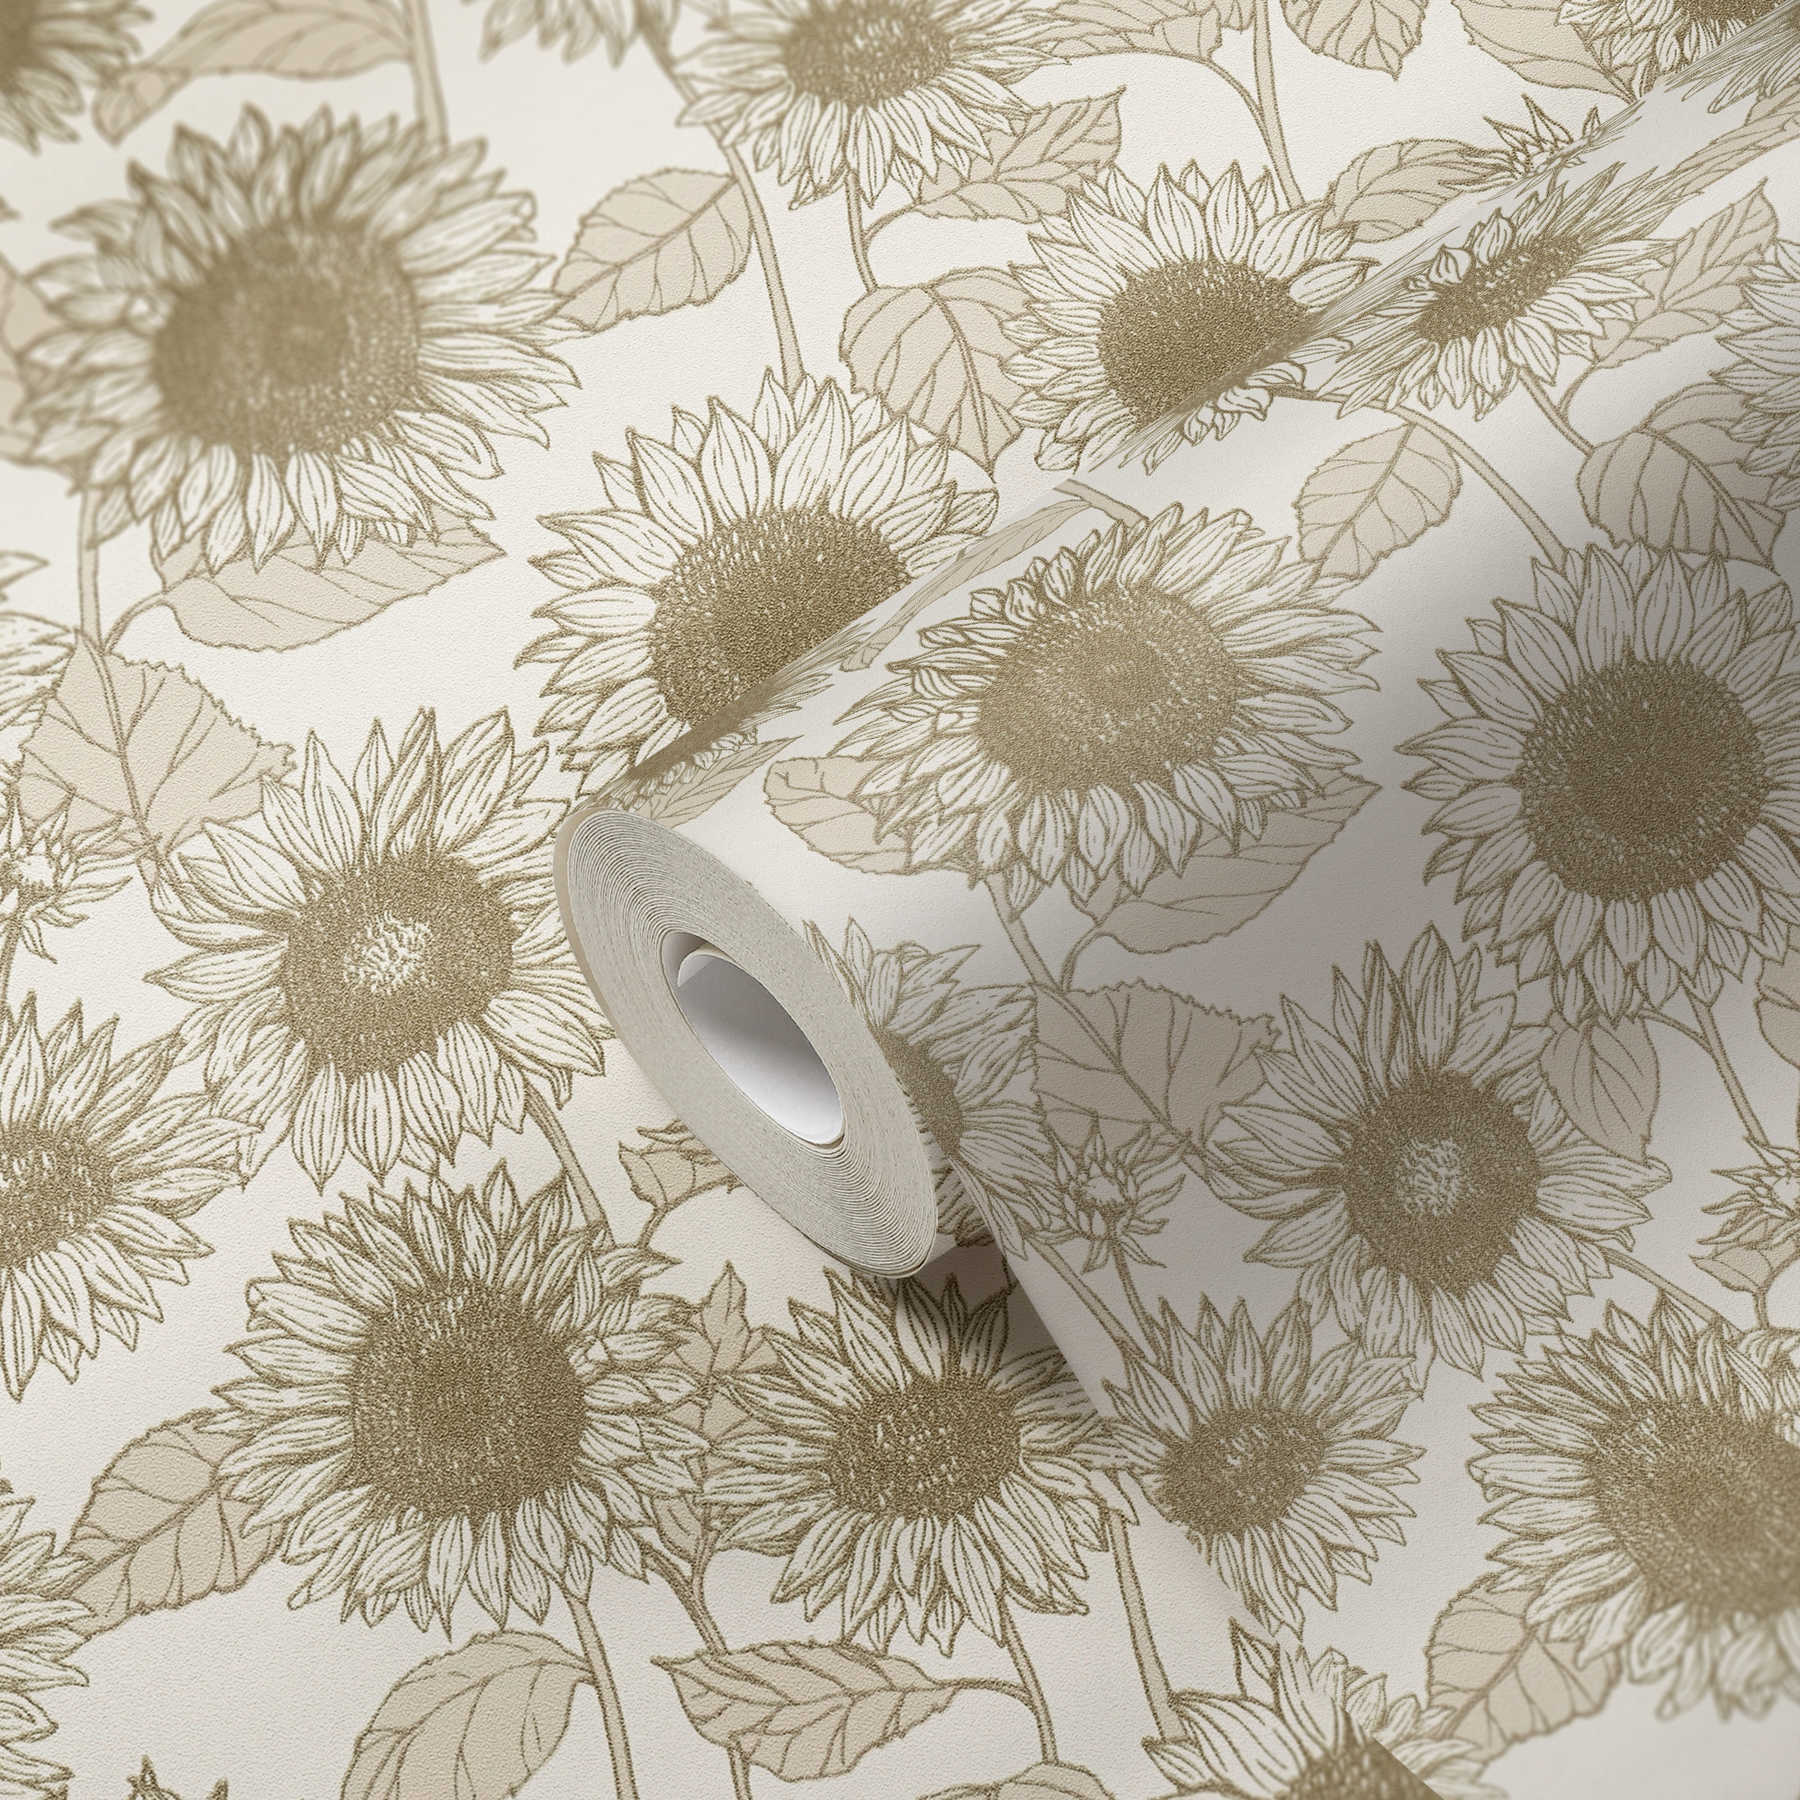             papel pintado girasoles con efecto metálico - beige, blanco
        